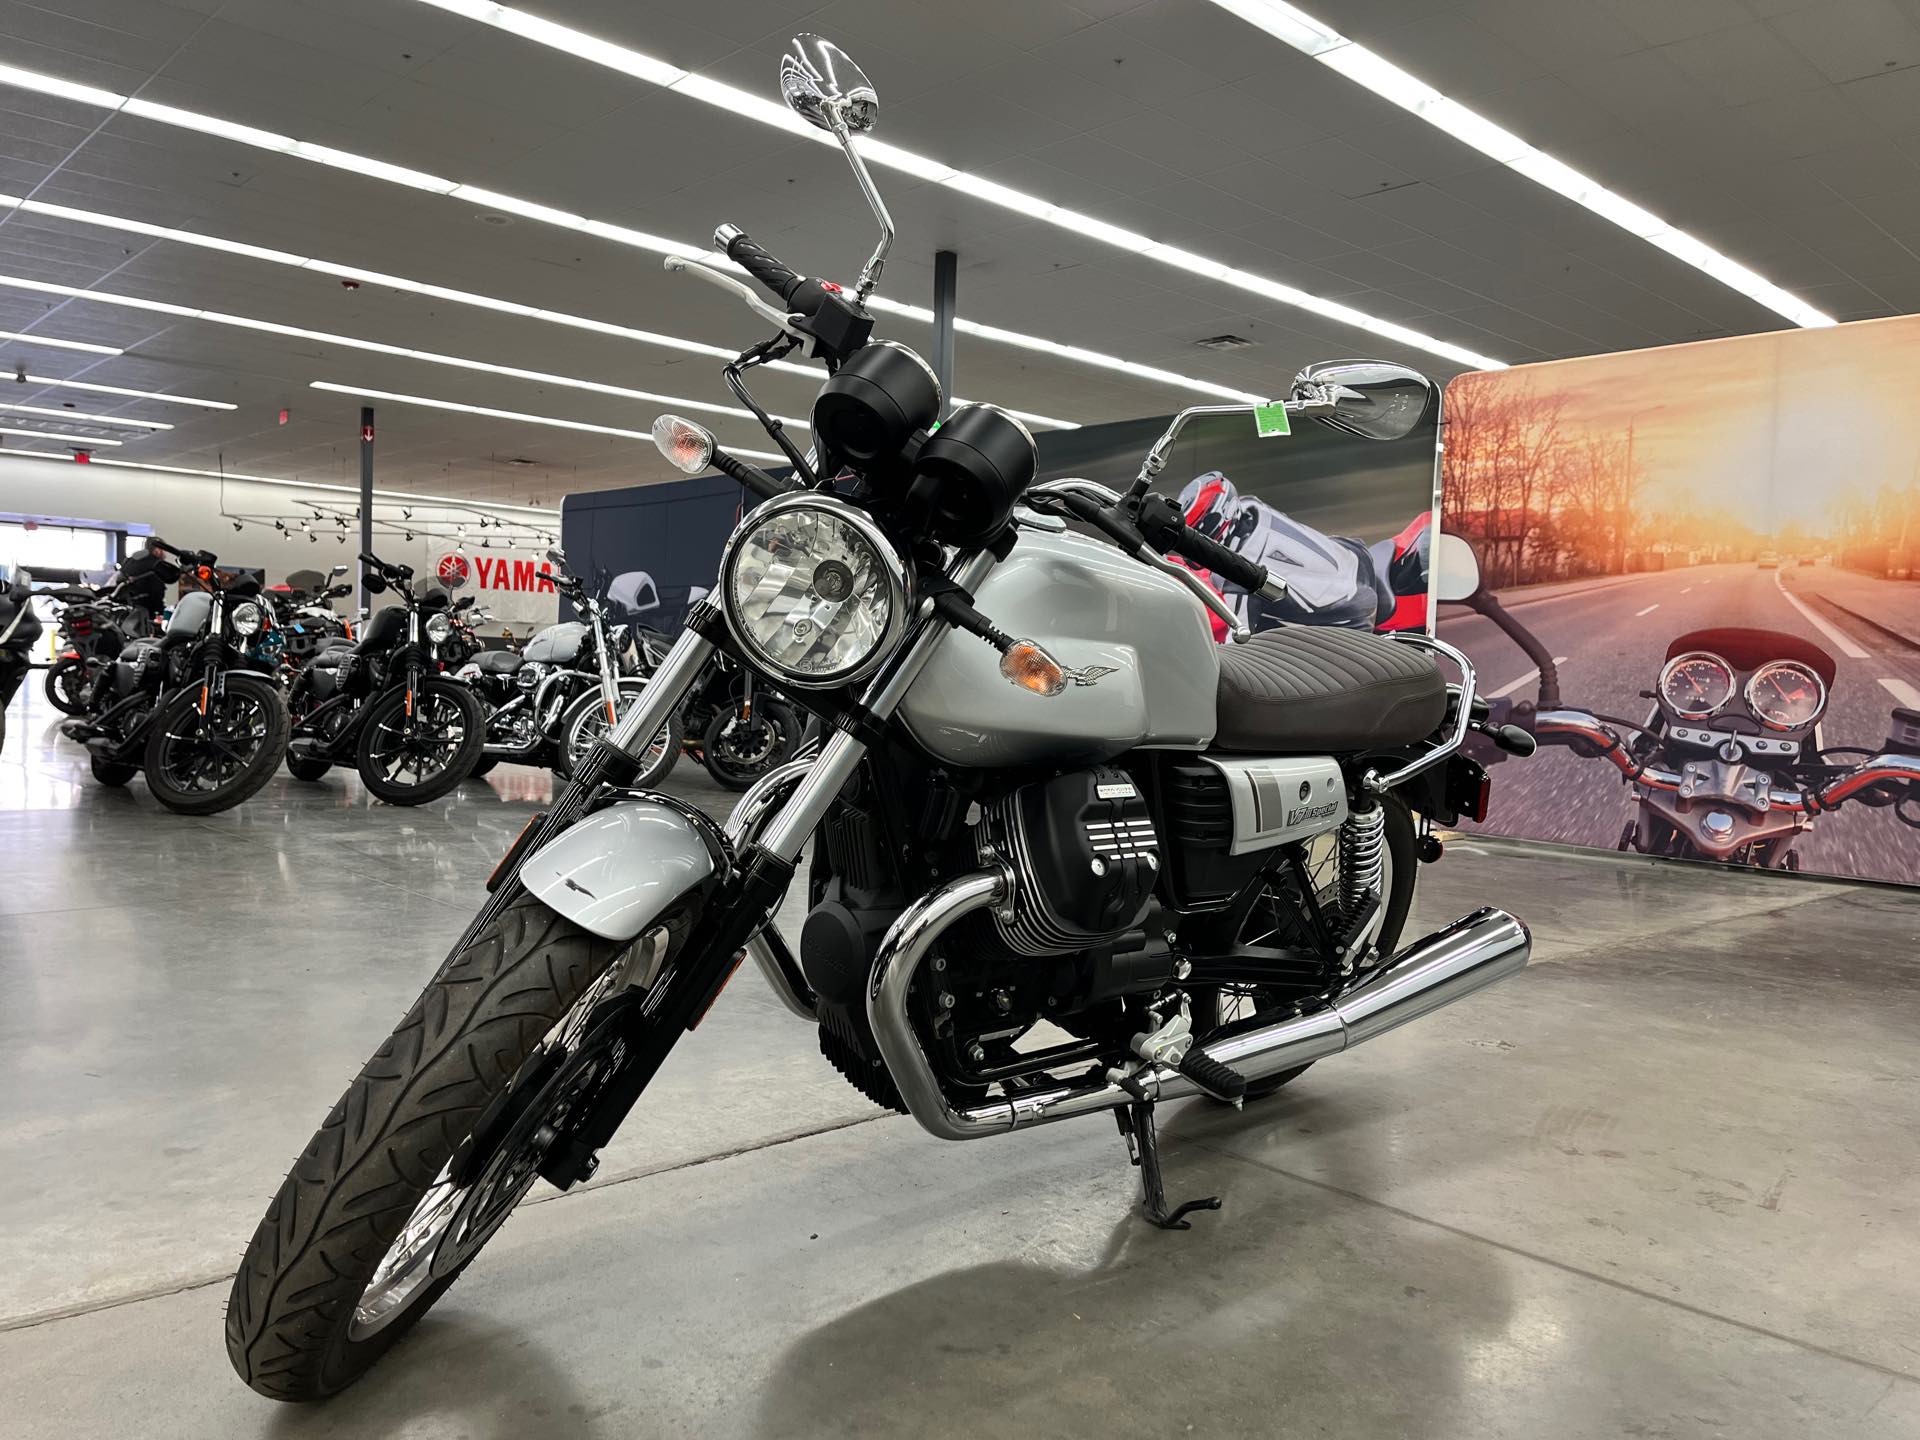 2019 Moto Guzzi V7 III Rough at Aces Motorcycles - Denver